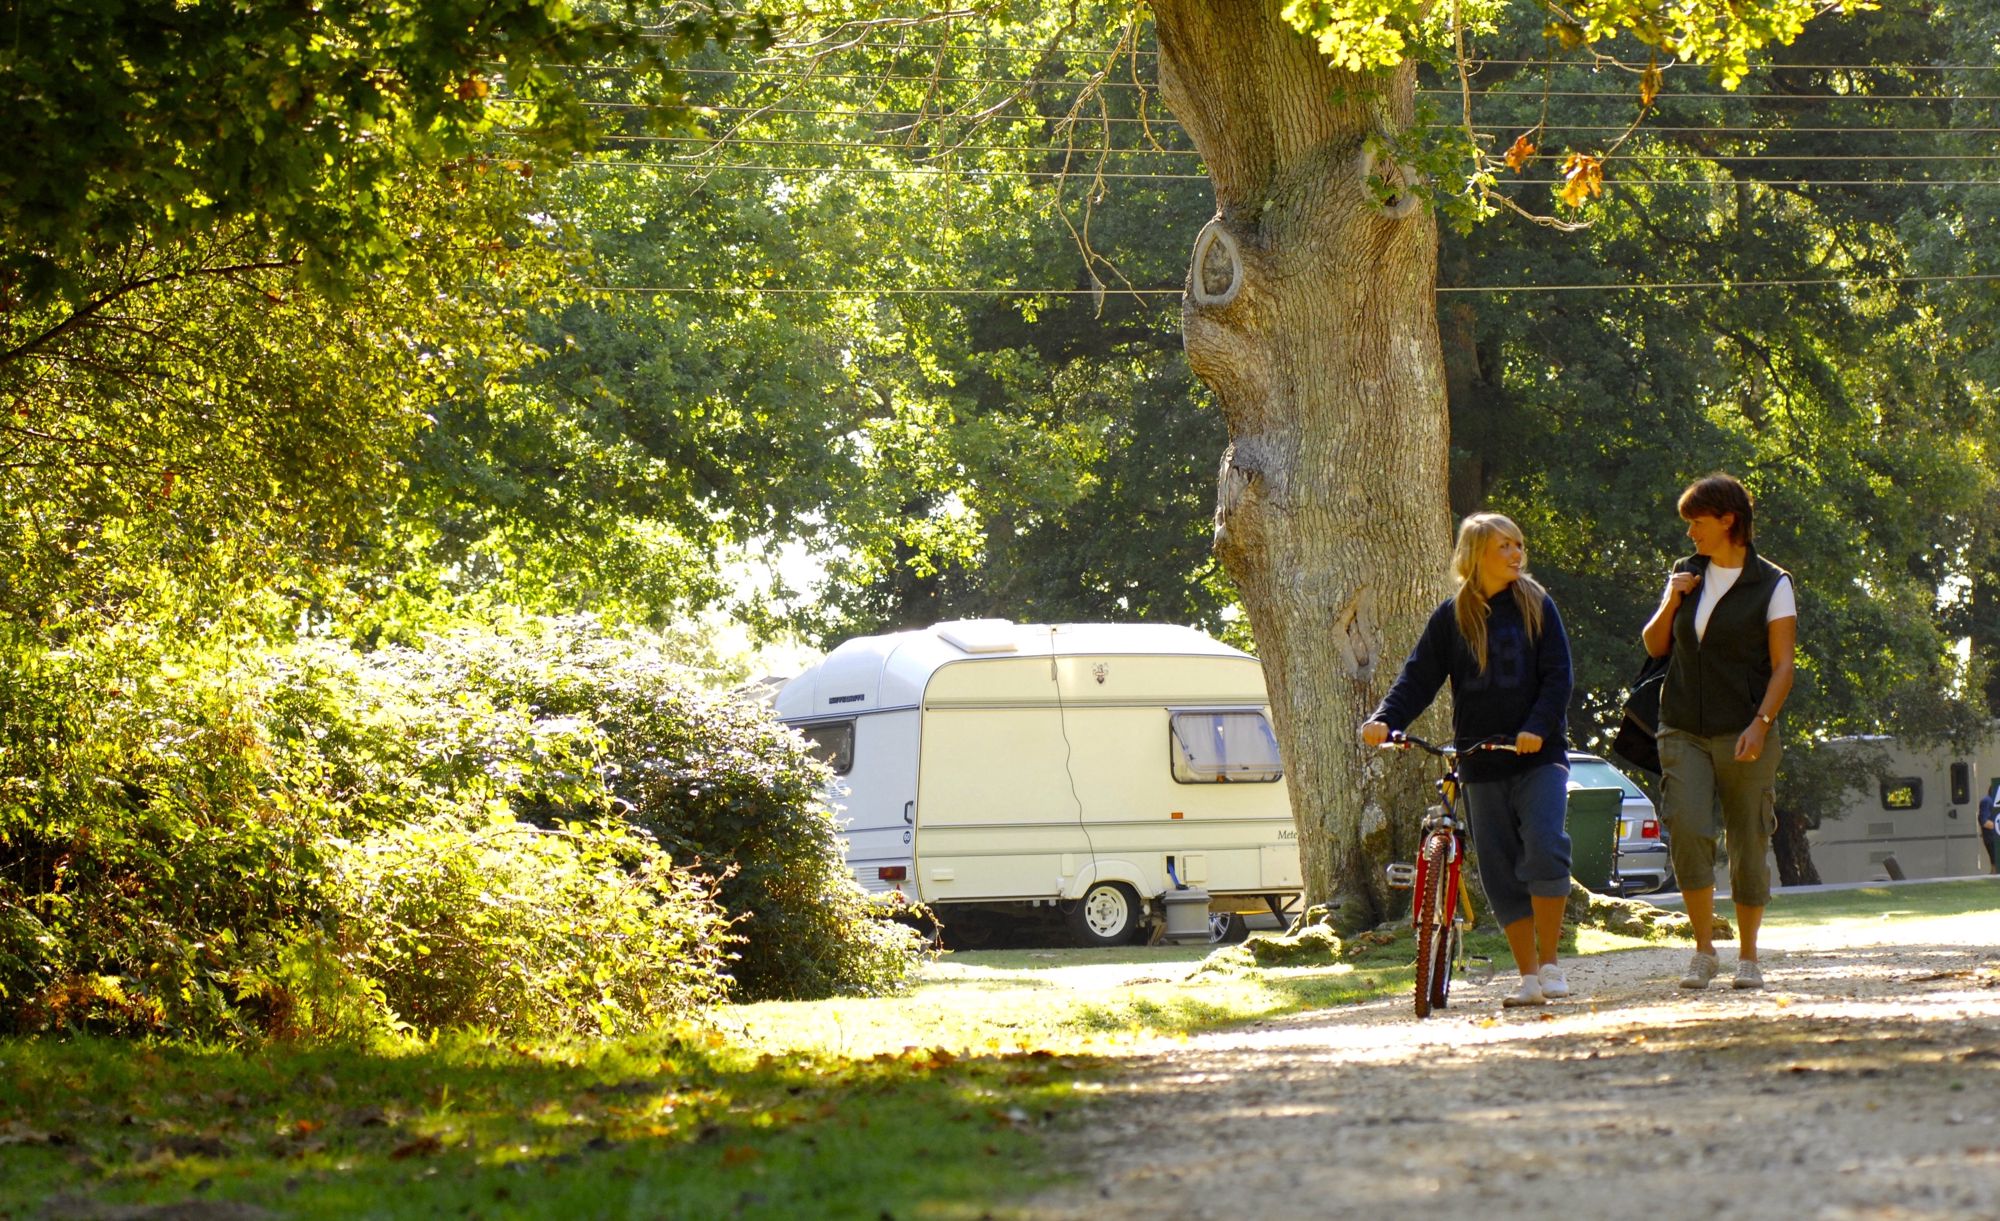 Caravan holidays in the UK – Independent campsites that accept caravans